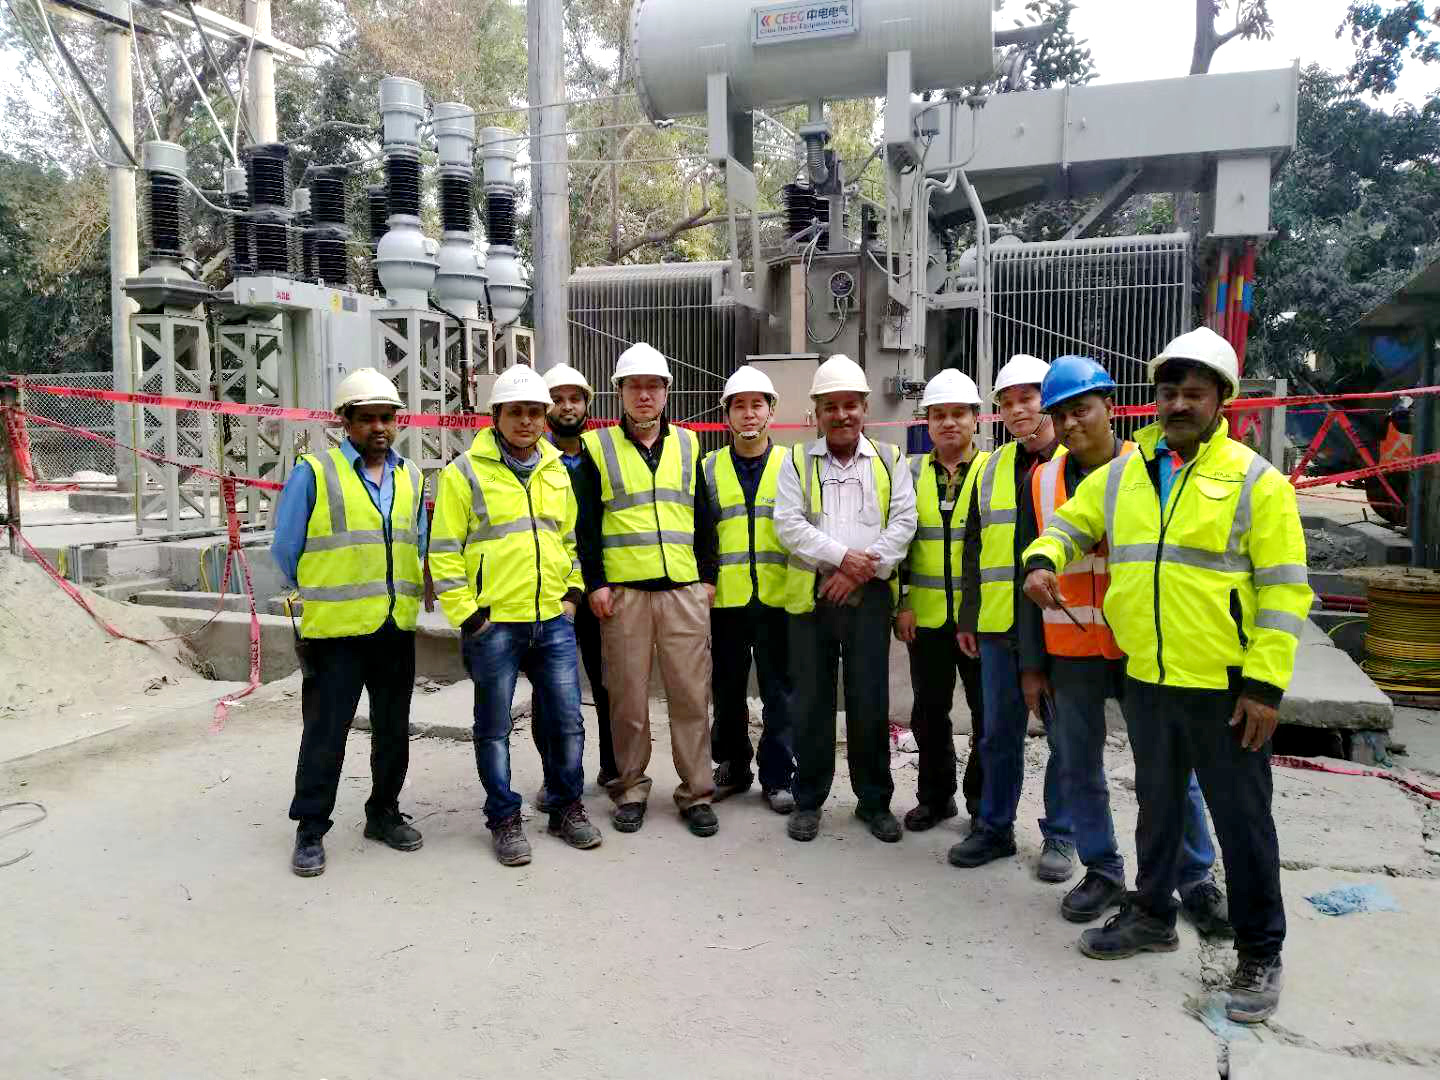 得潤電氣開關柜孟加拉海德堡發電站供電成功    Anhui Derun Electric’s switch cabinet successfully powered up Heidelberg Power Station in Bangladesh